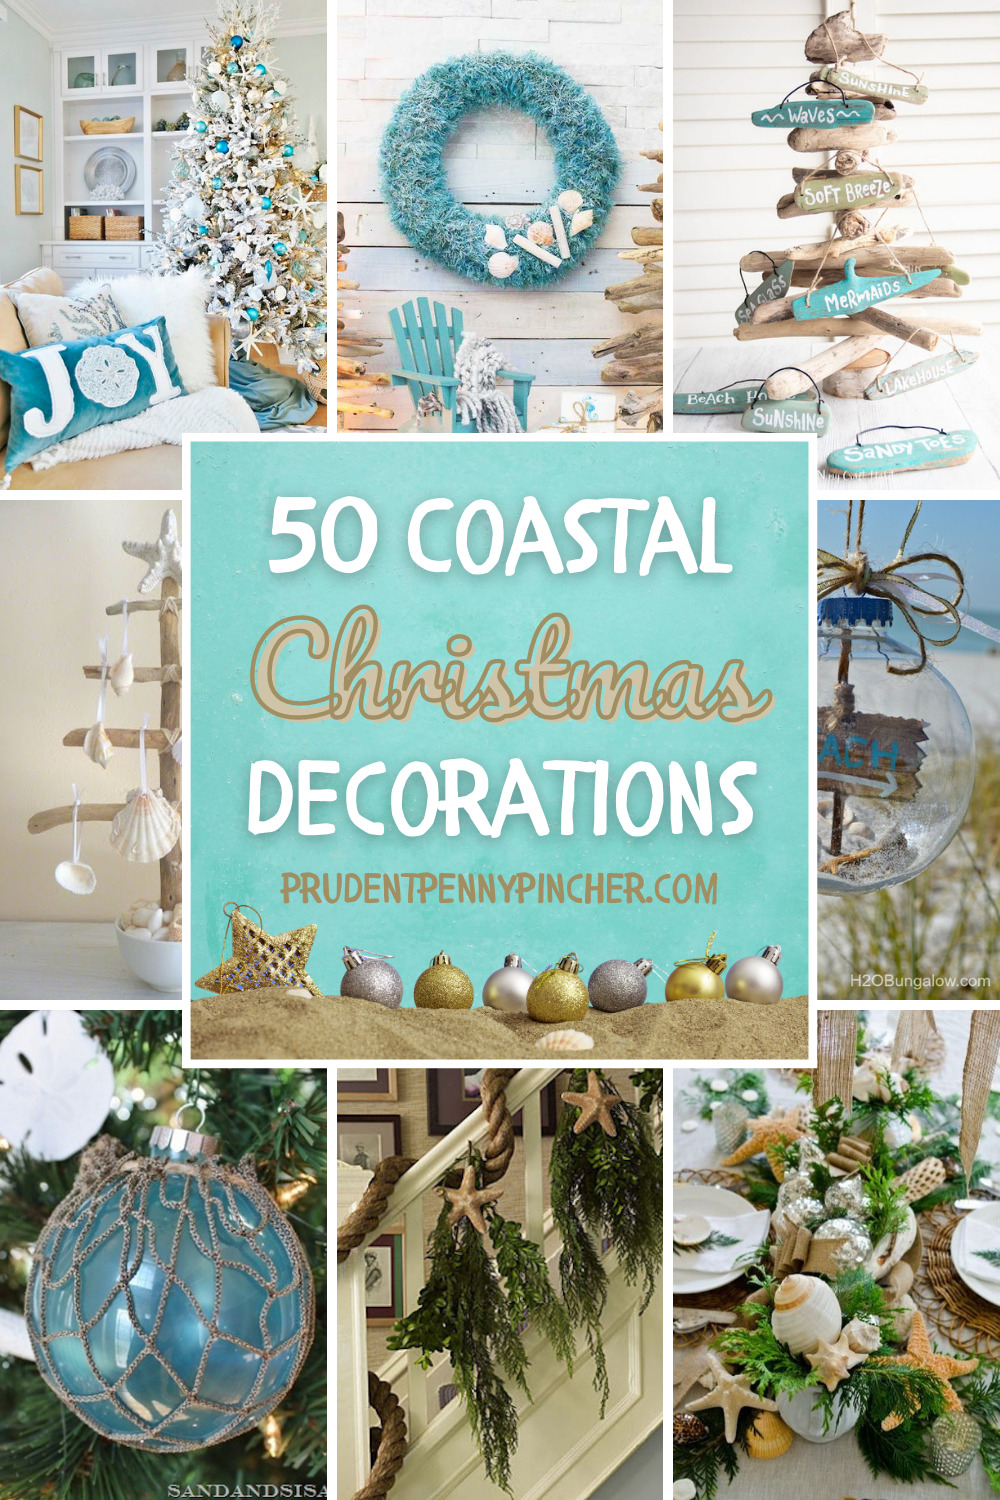 21 Coastal Christmas Decorating Ideas With Chic Beach Vacation